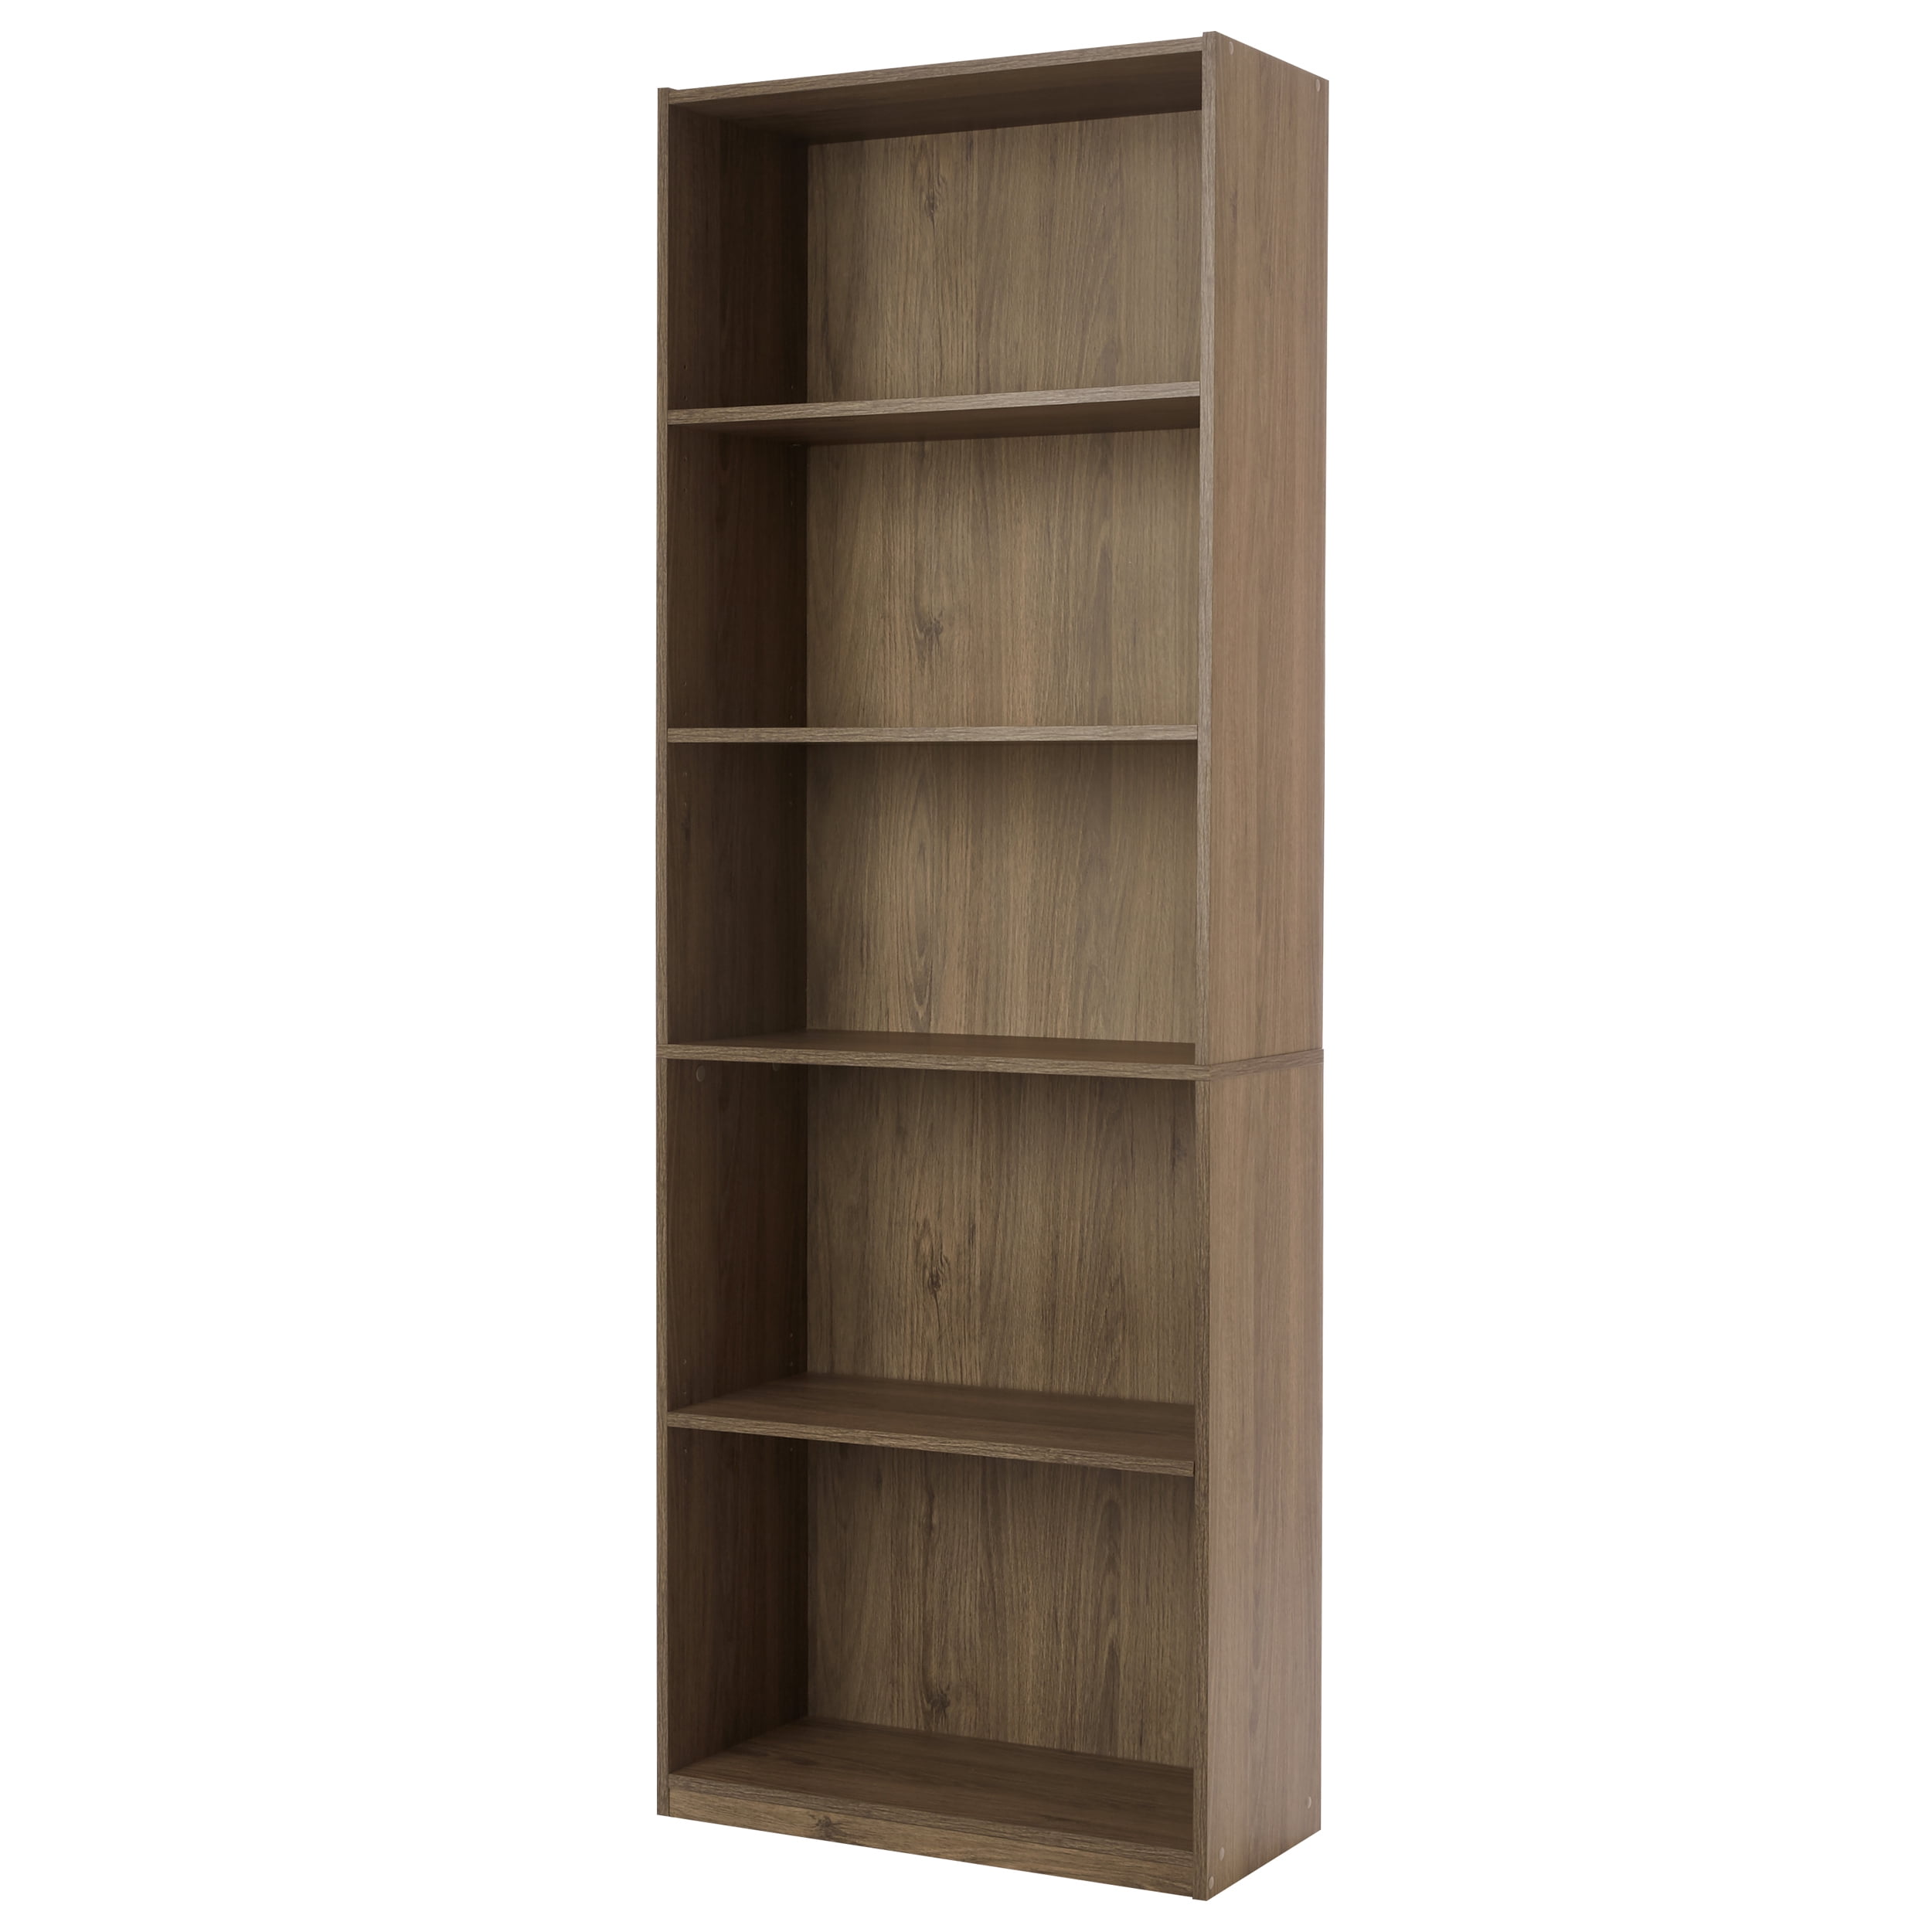 3/4/5 Shelf Bookcase Book Shelves Storage Books Crafts Shelving Organizer P2G6 